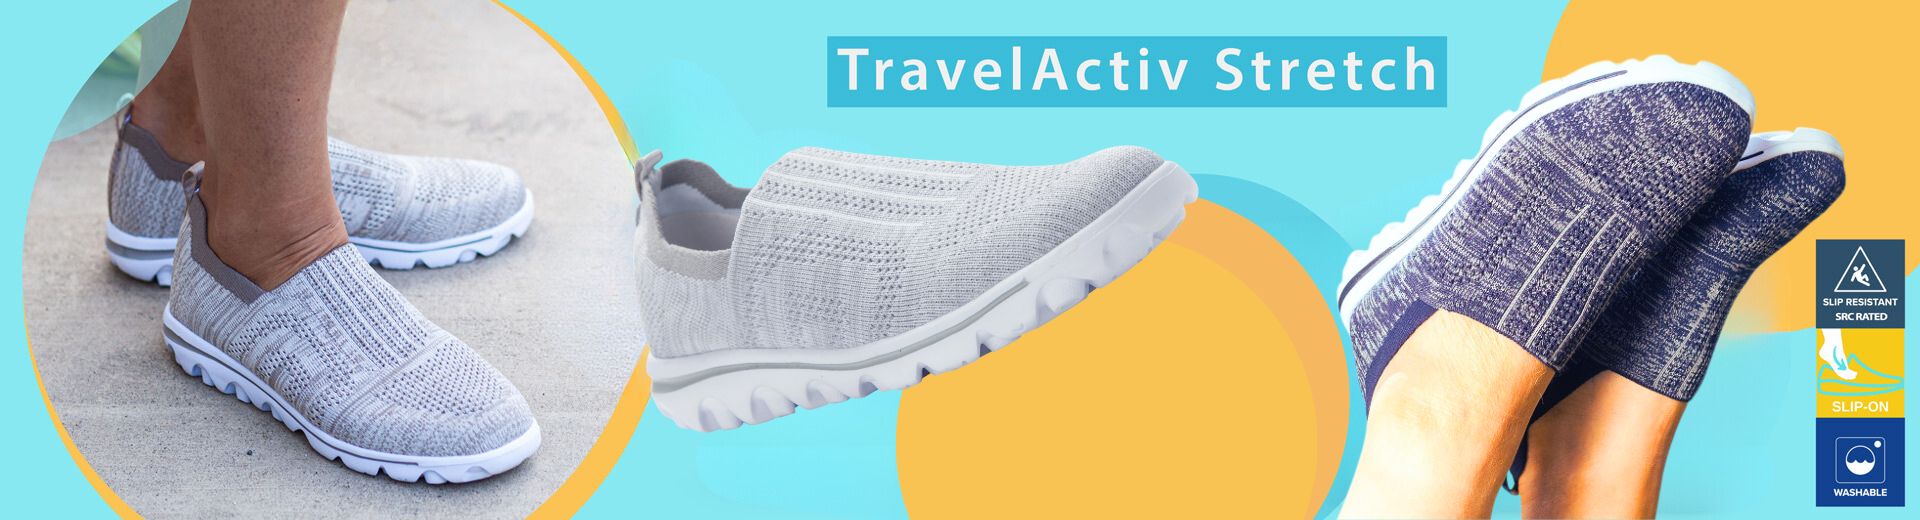 Women's TravelActiv Stretch slip on shoes hero